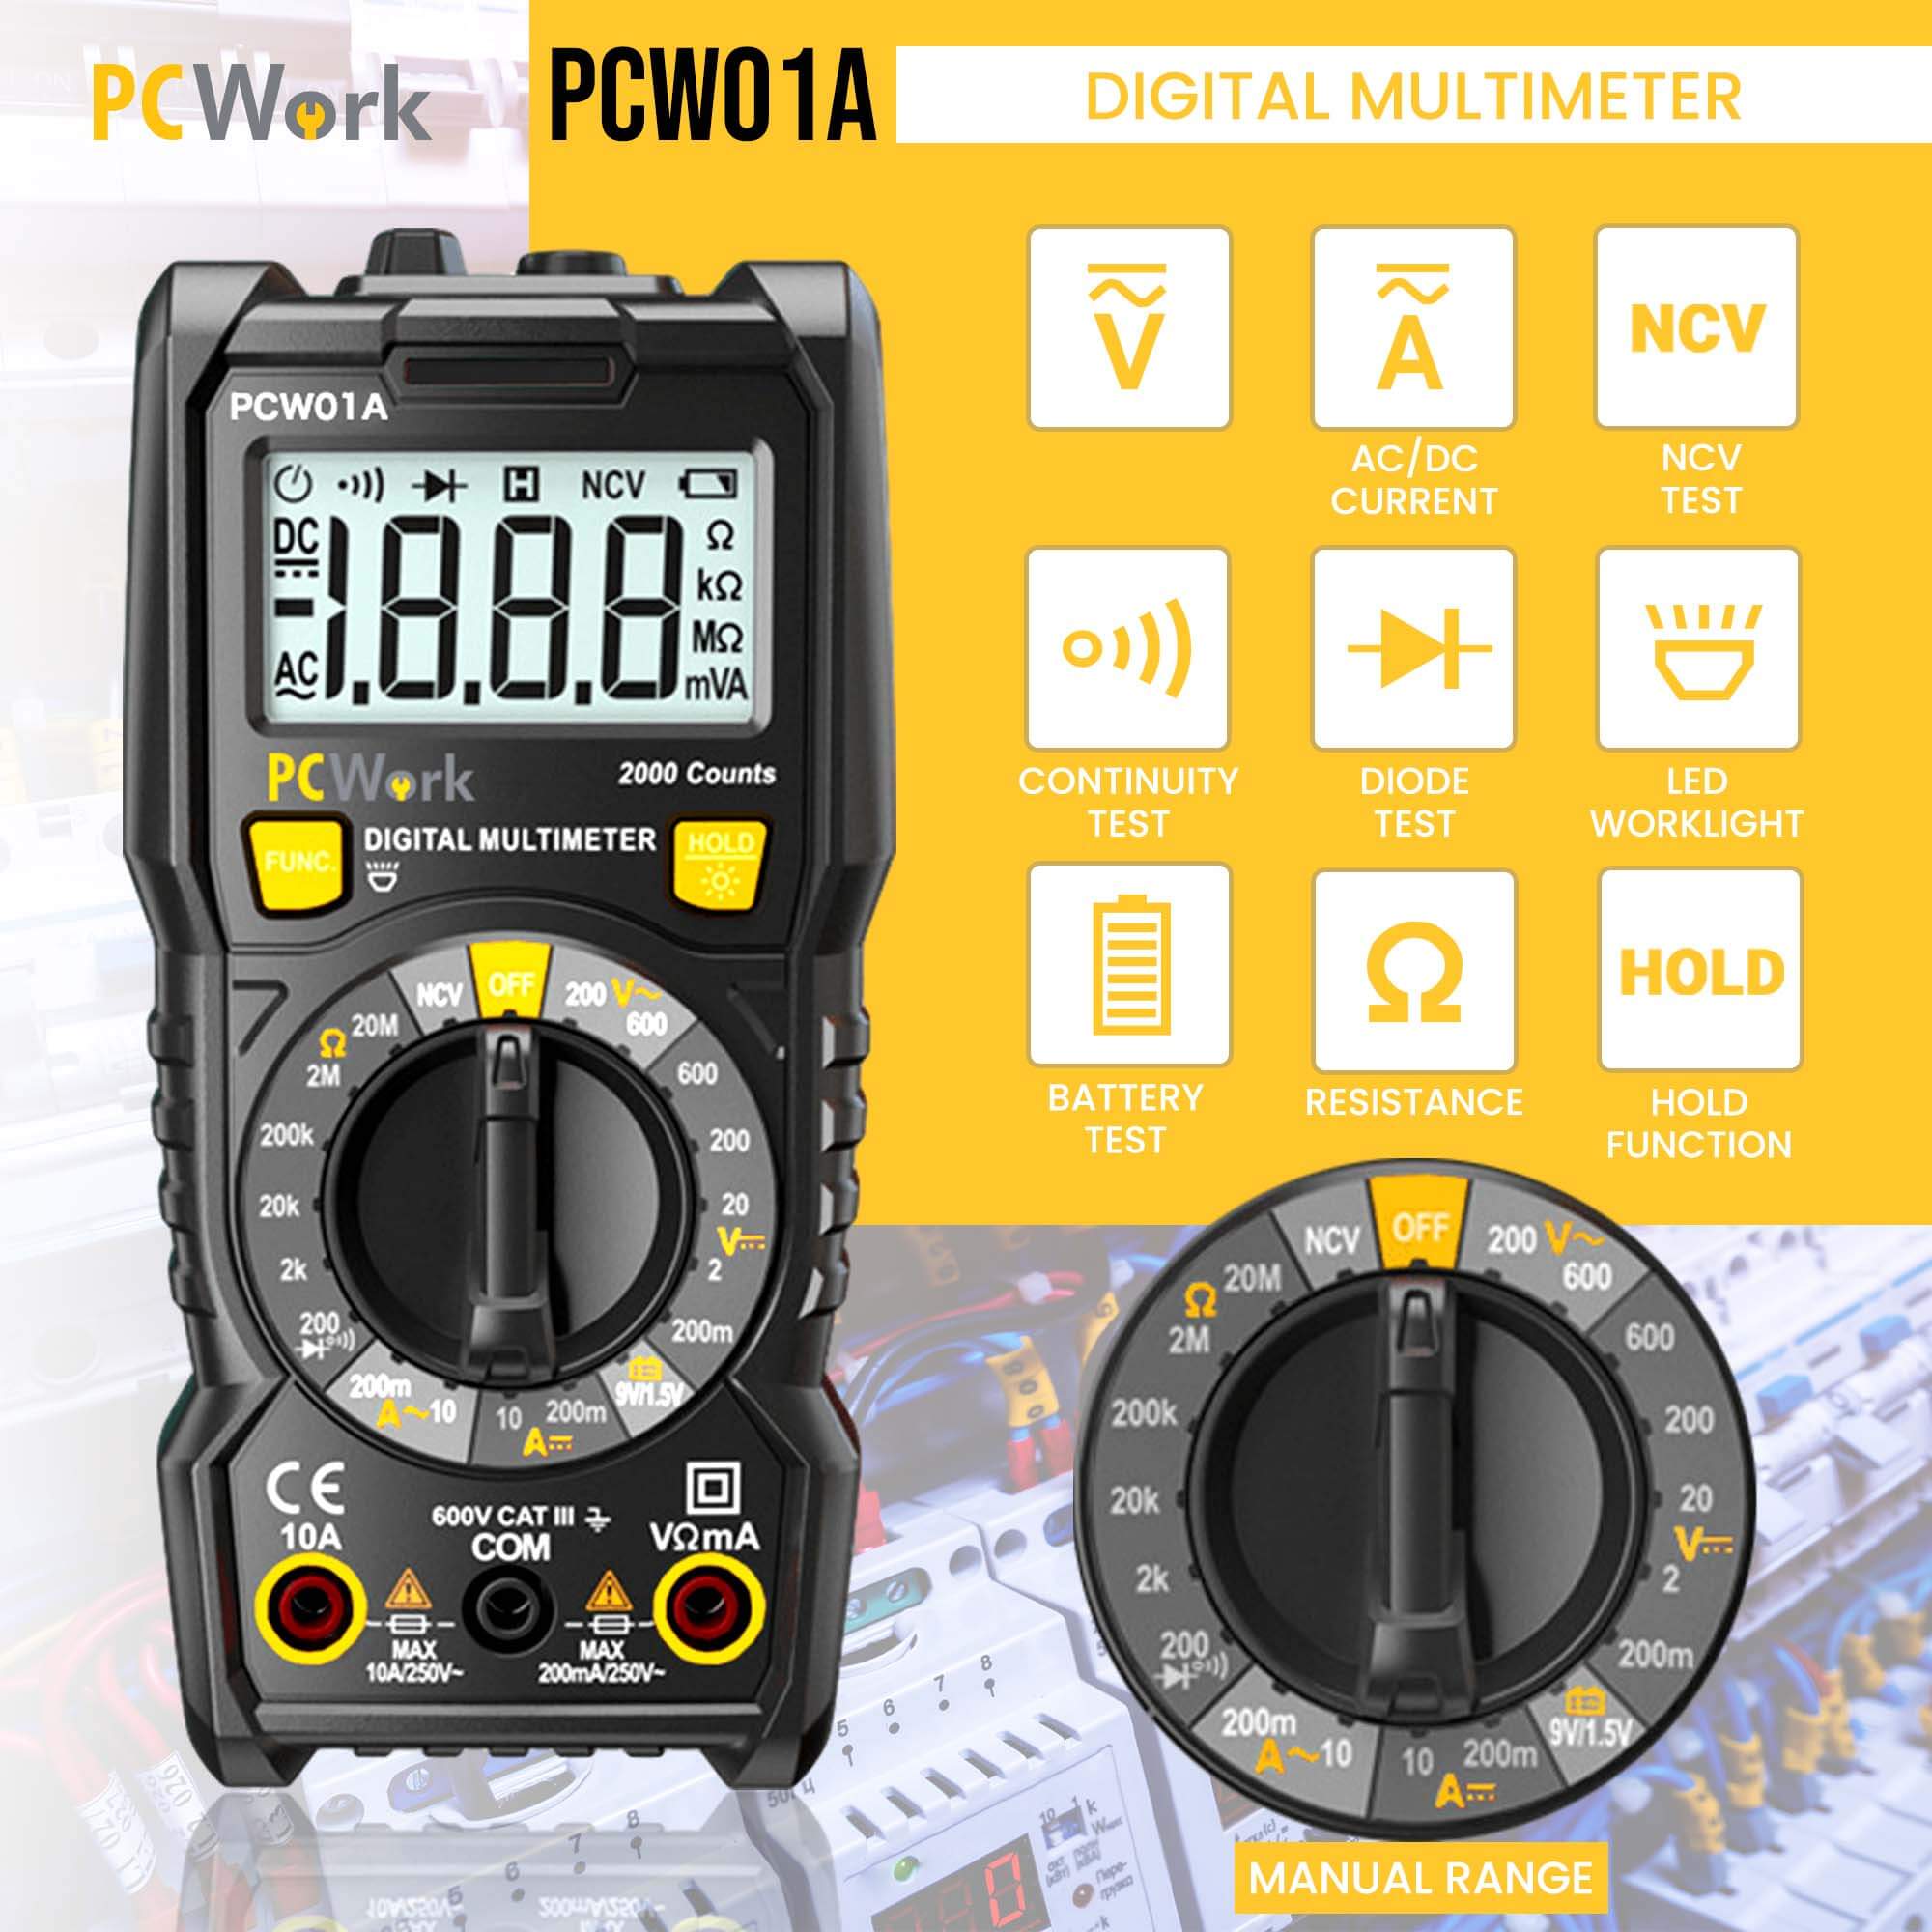 PCW01A Digital Multimeter, Manual Range, 2000 Counts, CAT III 600V